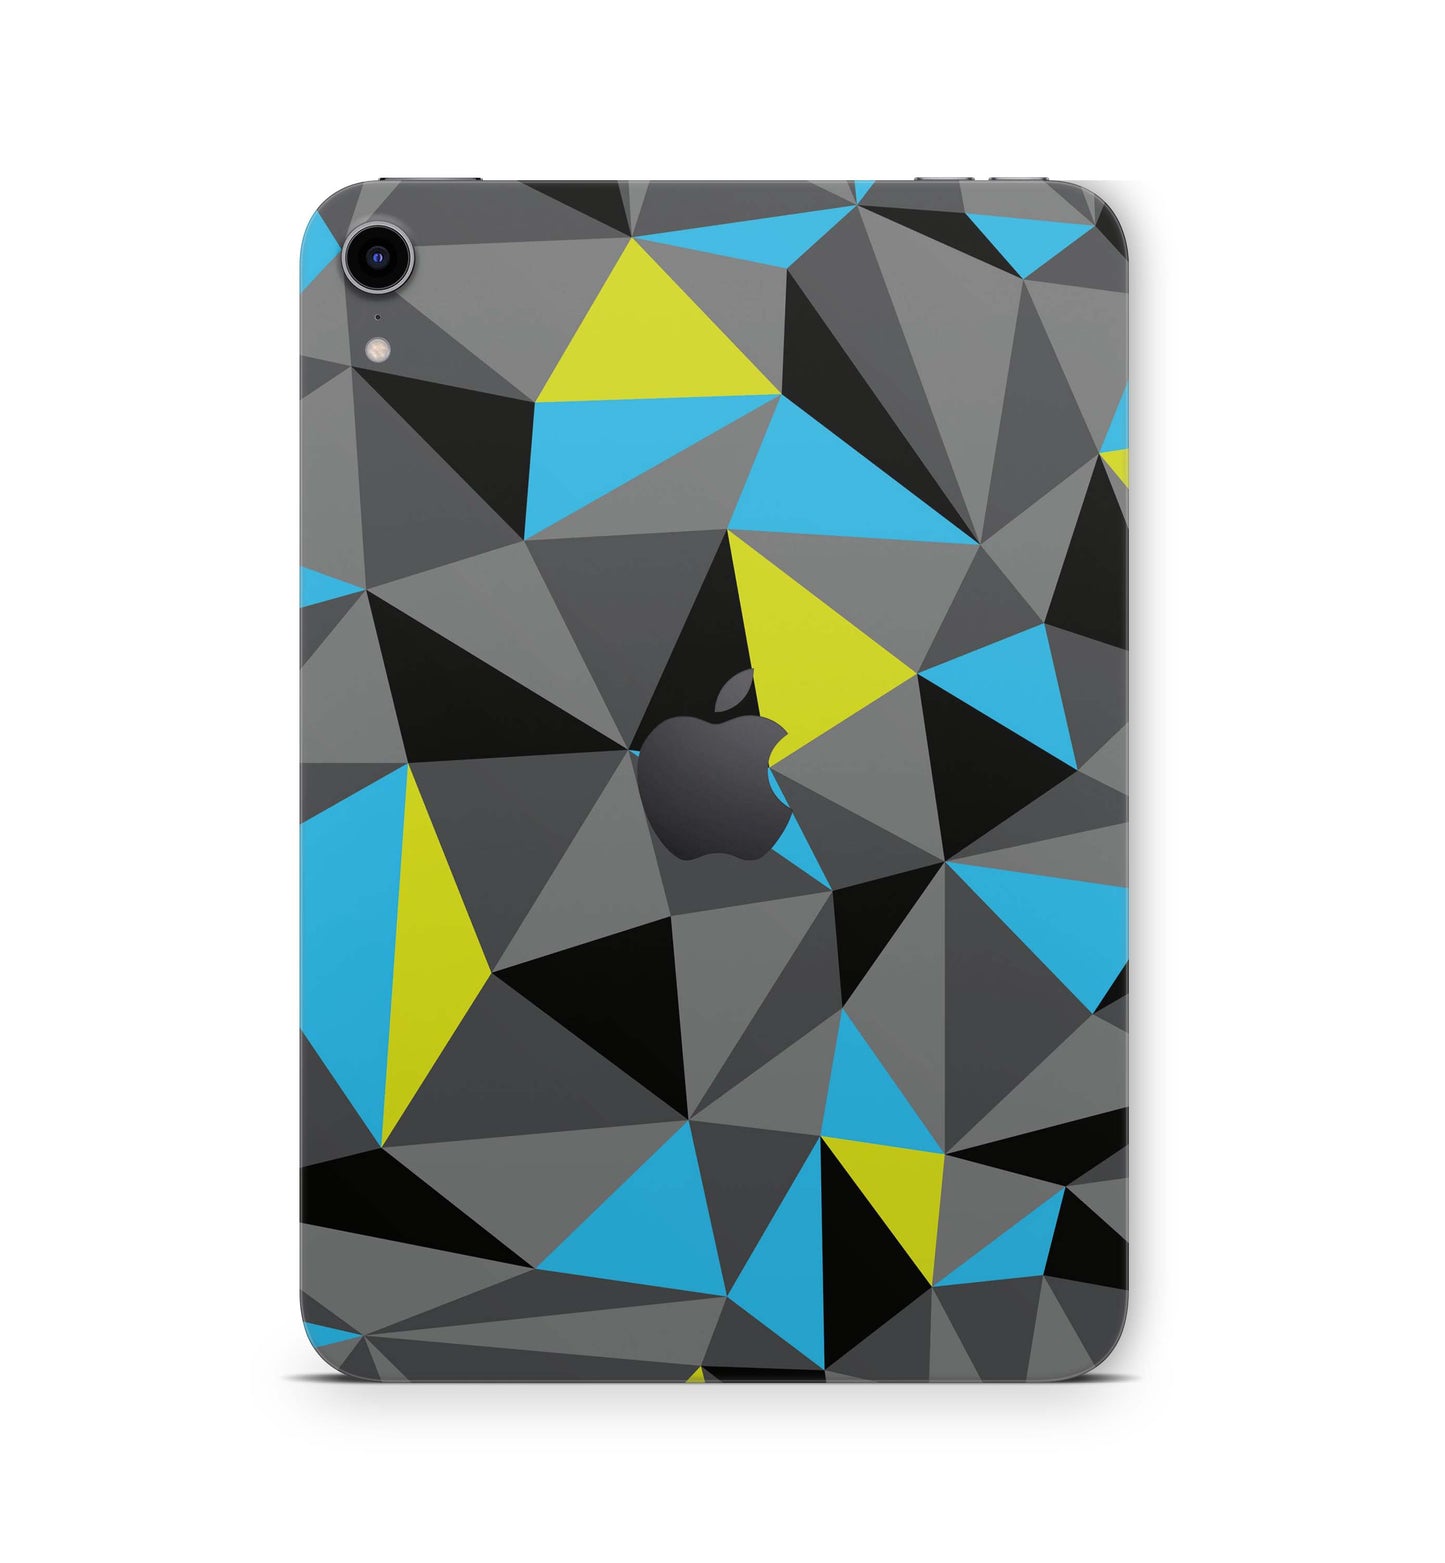 Apple iPad Skin Design Cover Folie Vinyl Skins & Wraps für alle iPad Modelle Aufkleber Skins4u Polycolor  